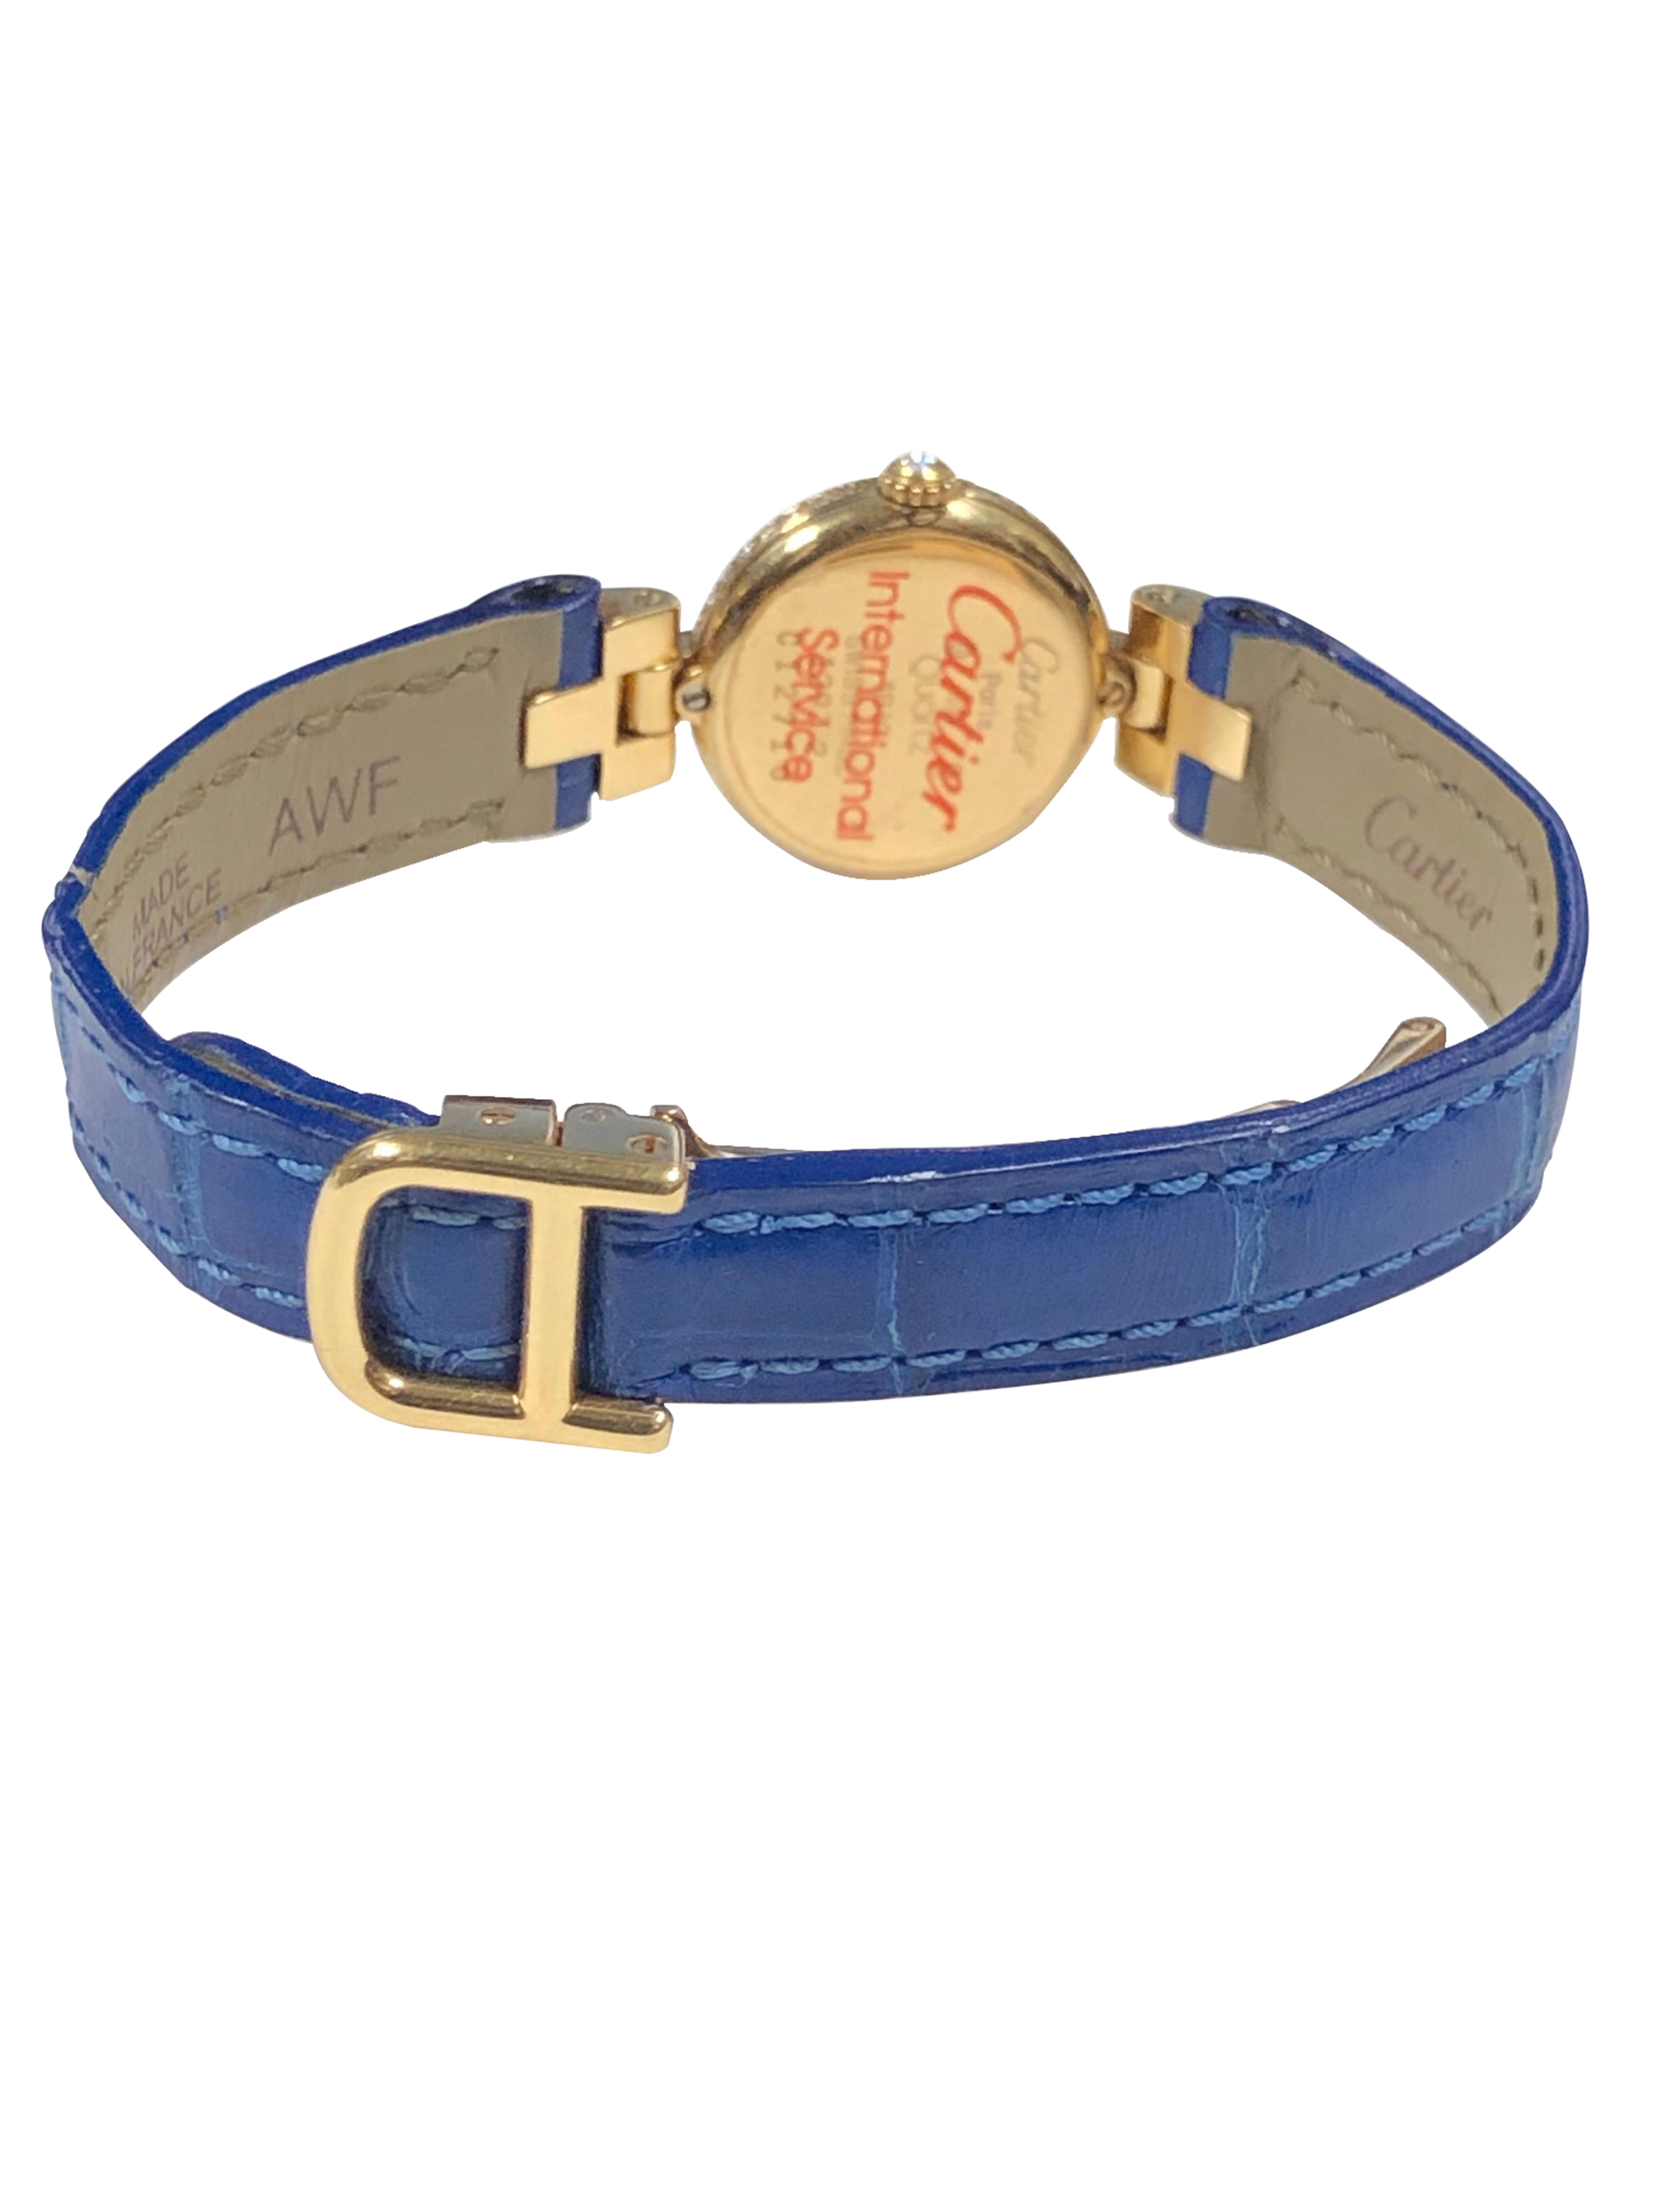 Cartier Louis Cartier Vendome Gold und Diamanten Damen Quarz-Armbanduhr 2